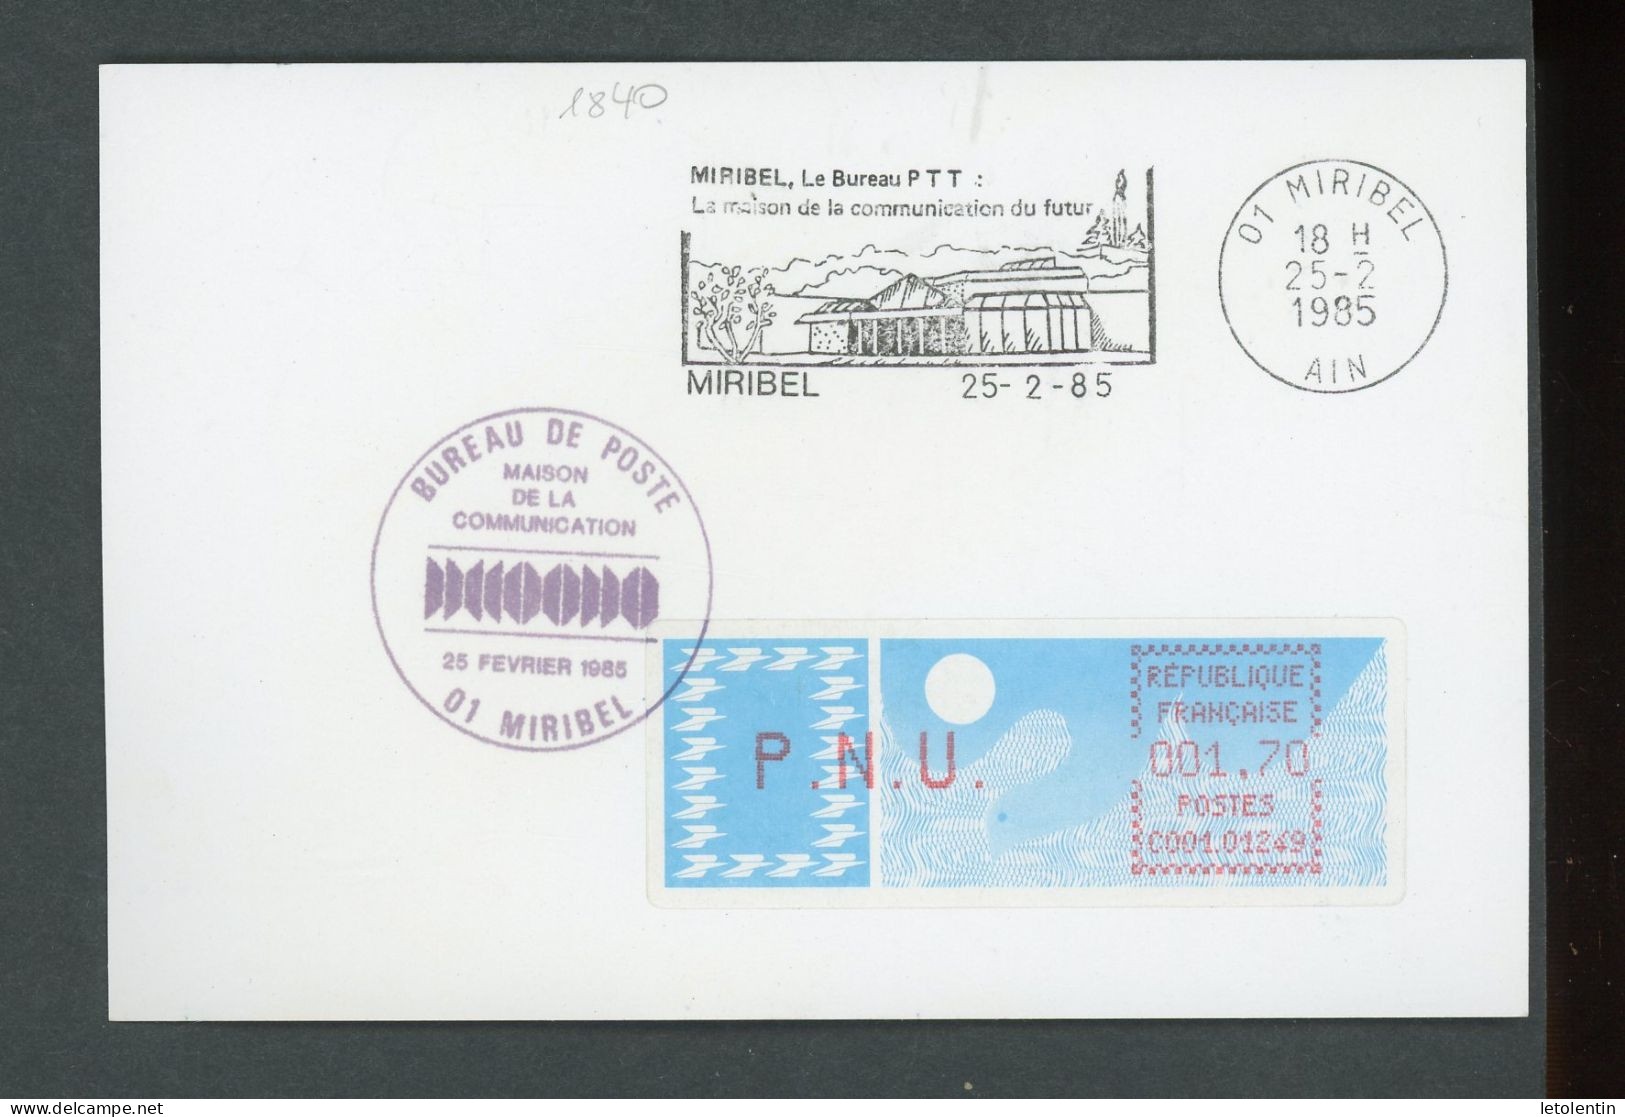 FRANCE - TIMBRES DE DISTRIBUTEUR LSA TYPE A - PNU 1,70 MIRIBEL (C001 01249) SUR CARTE DE MIRIBEL DU 25/2/1985 - 1985 Carta « Carrier »